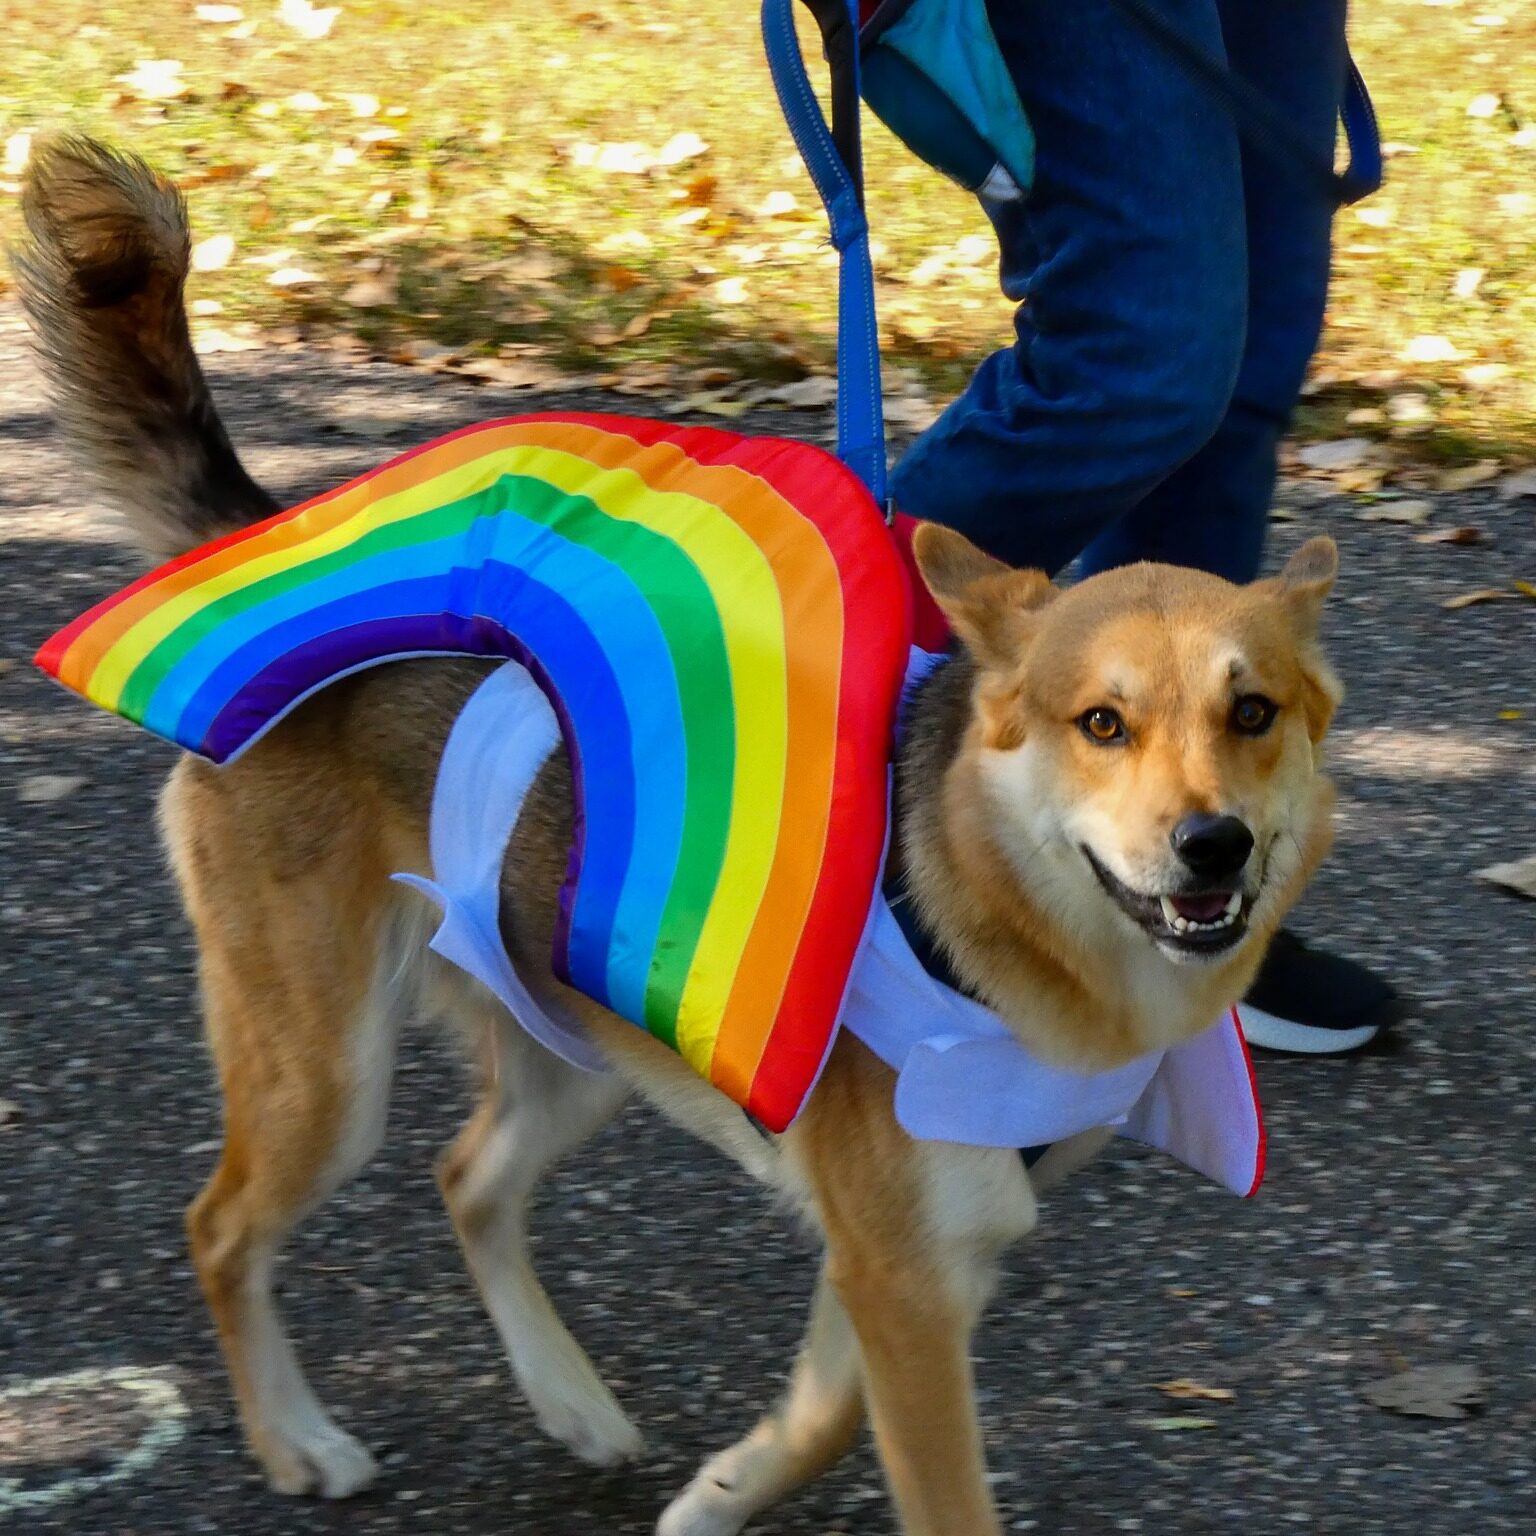 Dog wearing a rainbow costume